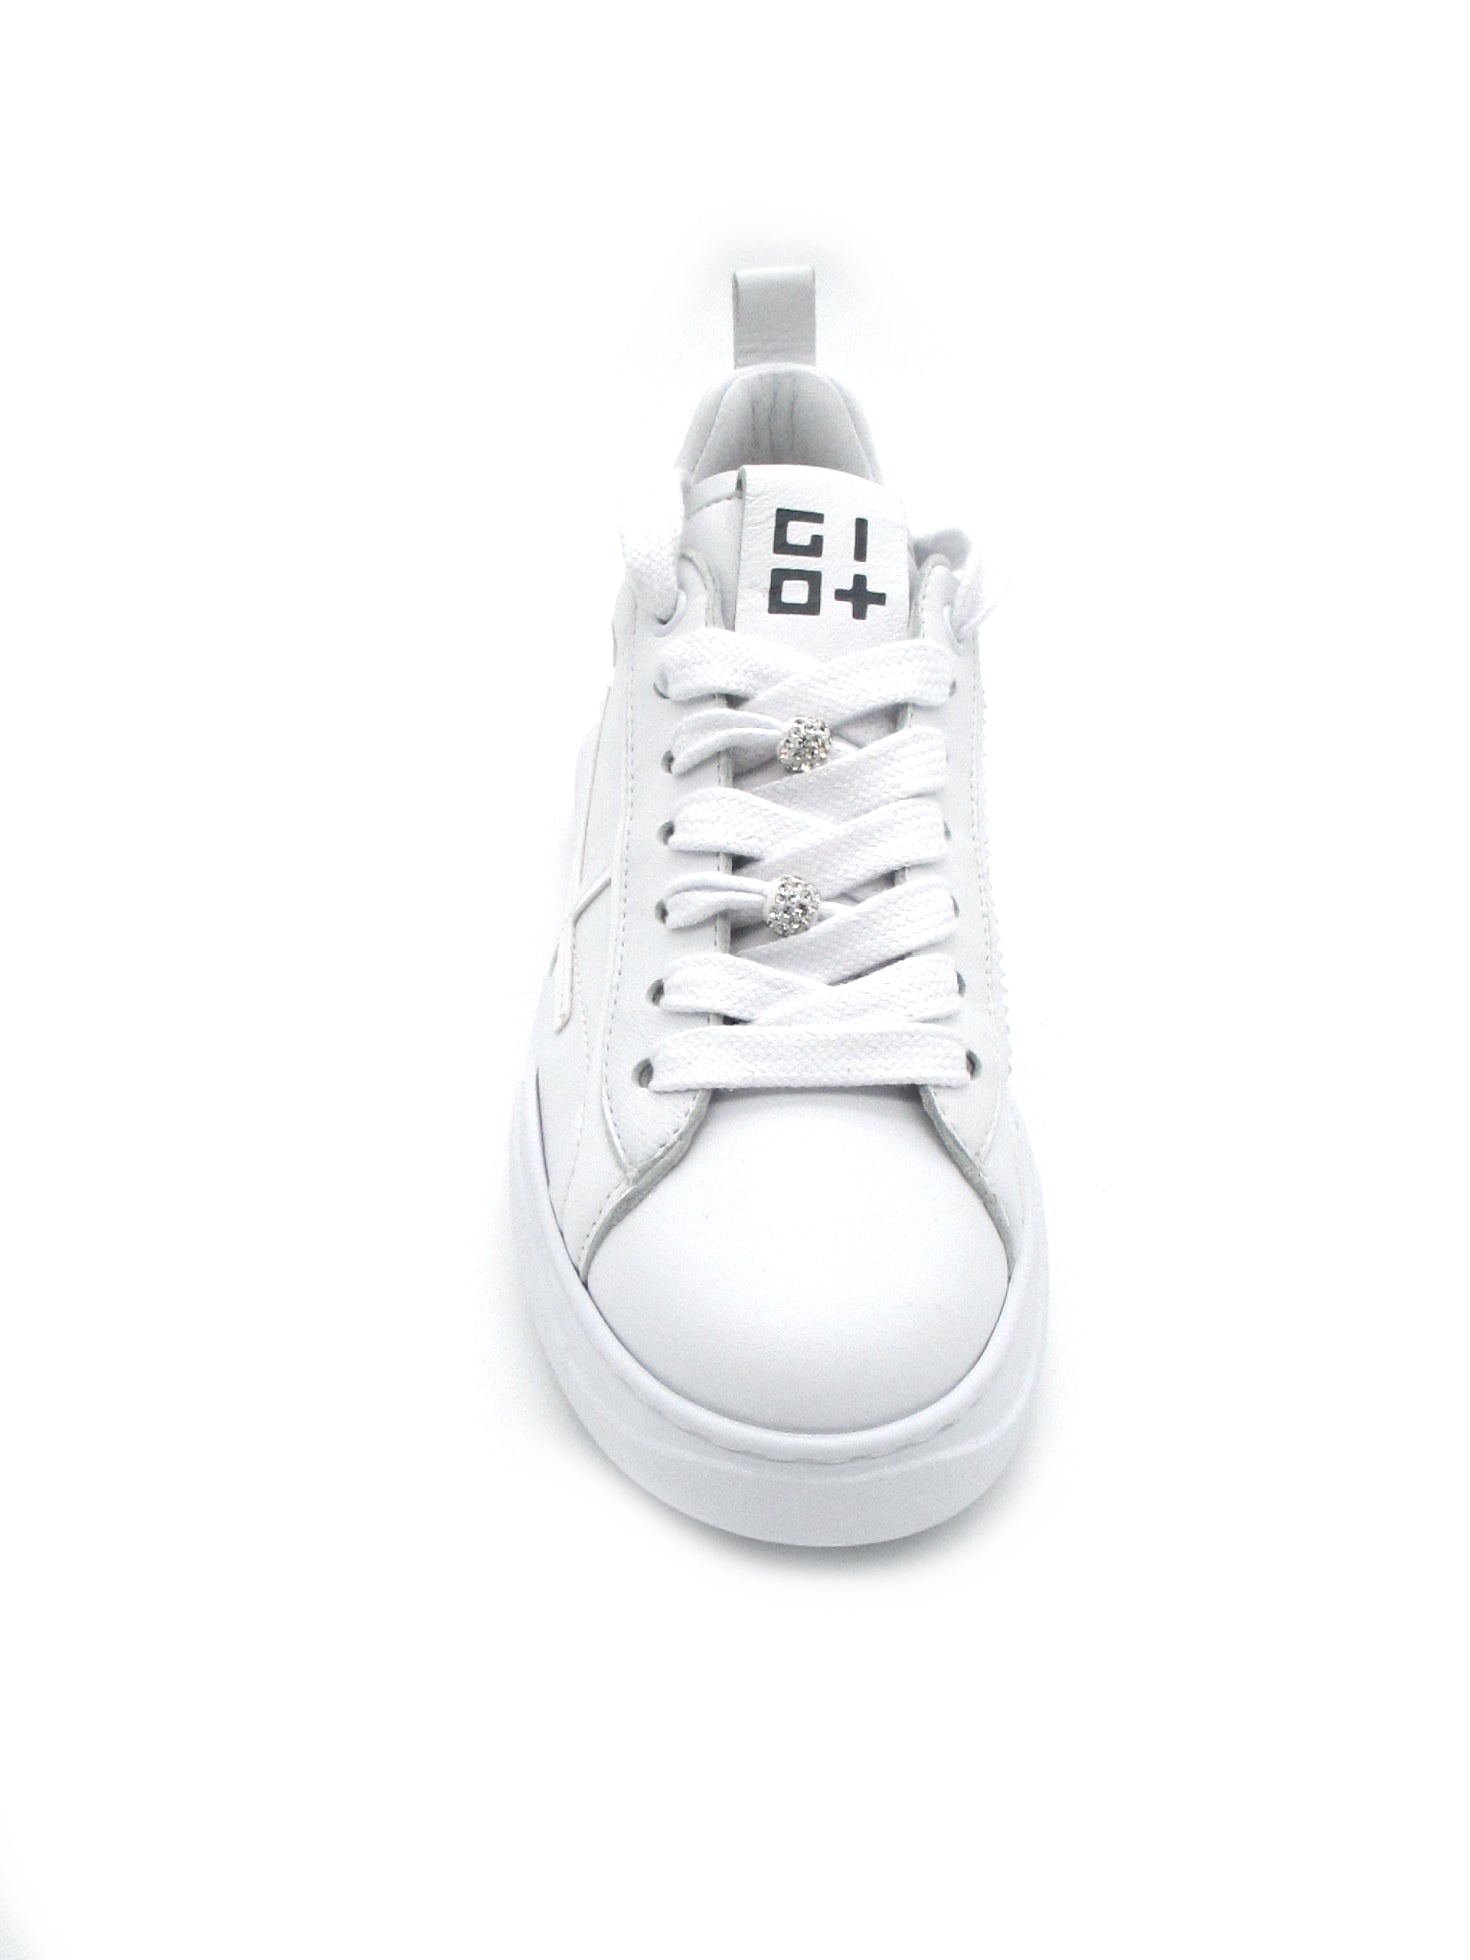 Sneaker pelle donna GIO+ Combi White - GIADA 63A -